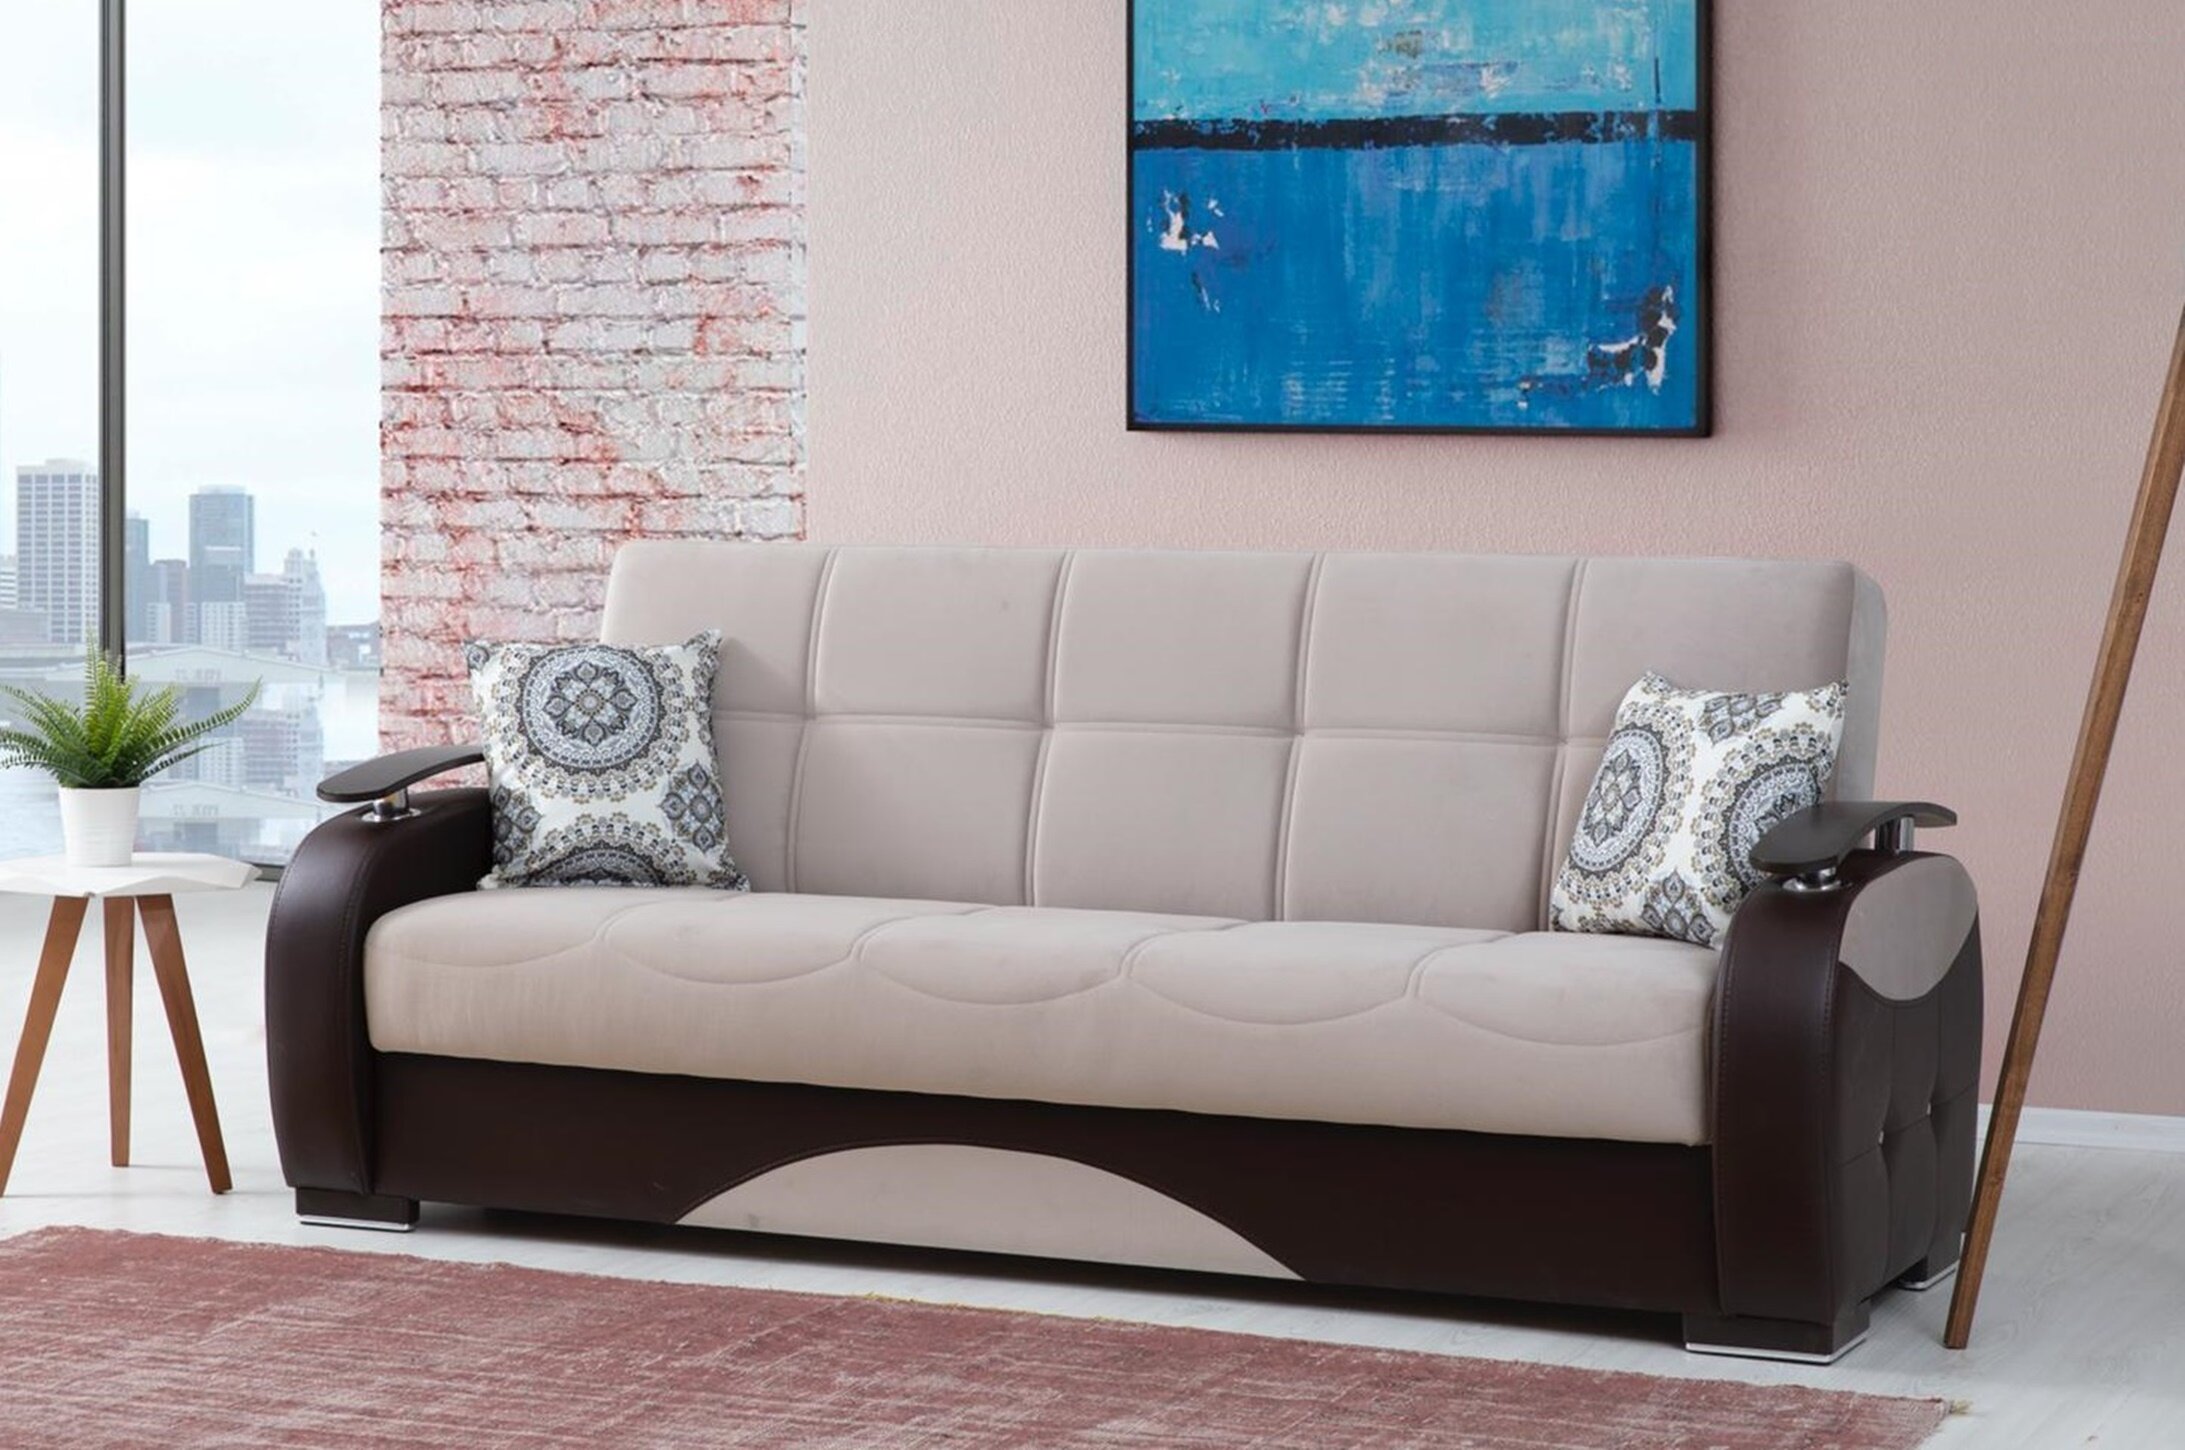 Ebern Designs Meriwether 90'' Upholstered Sleeper Sofa